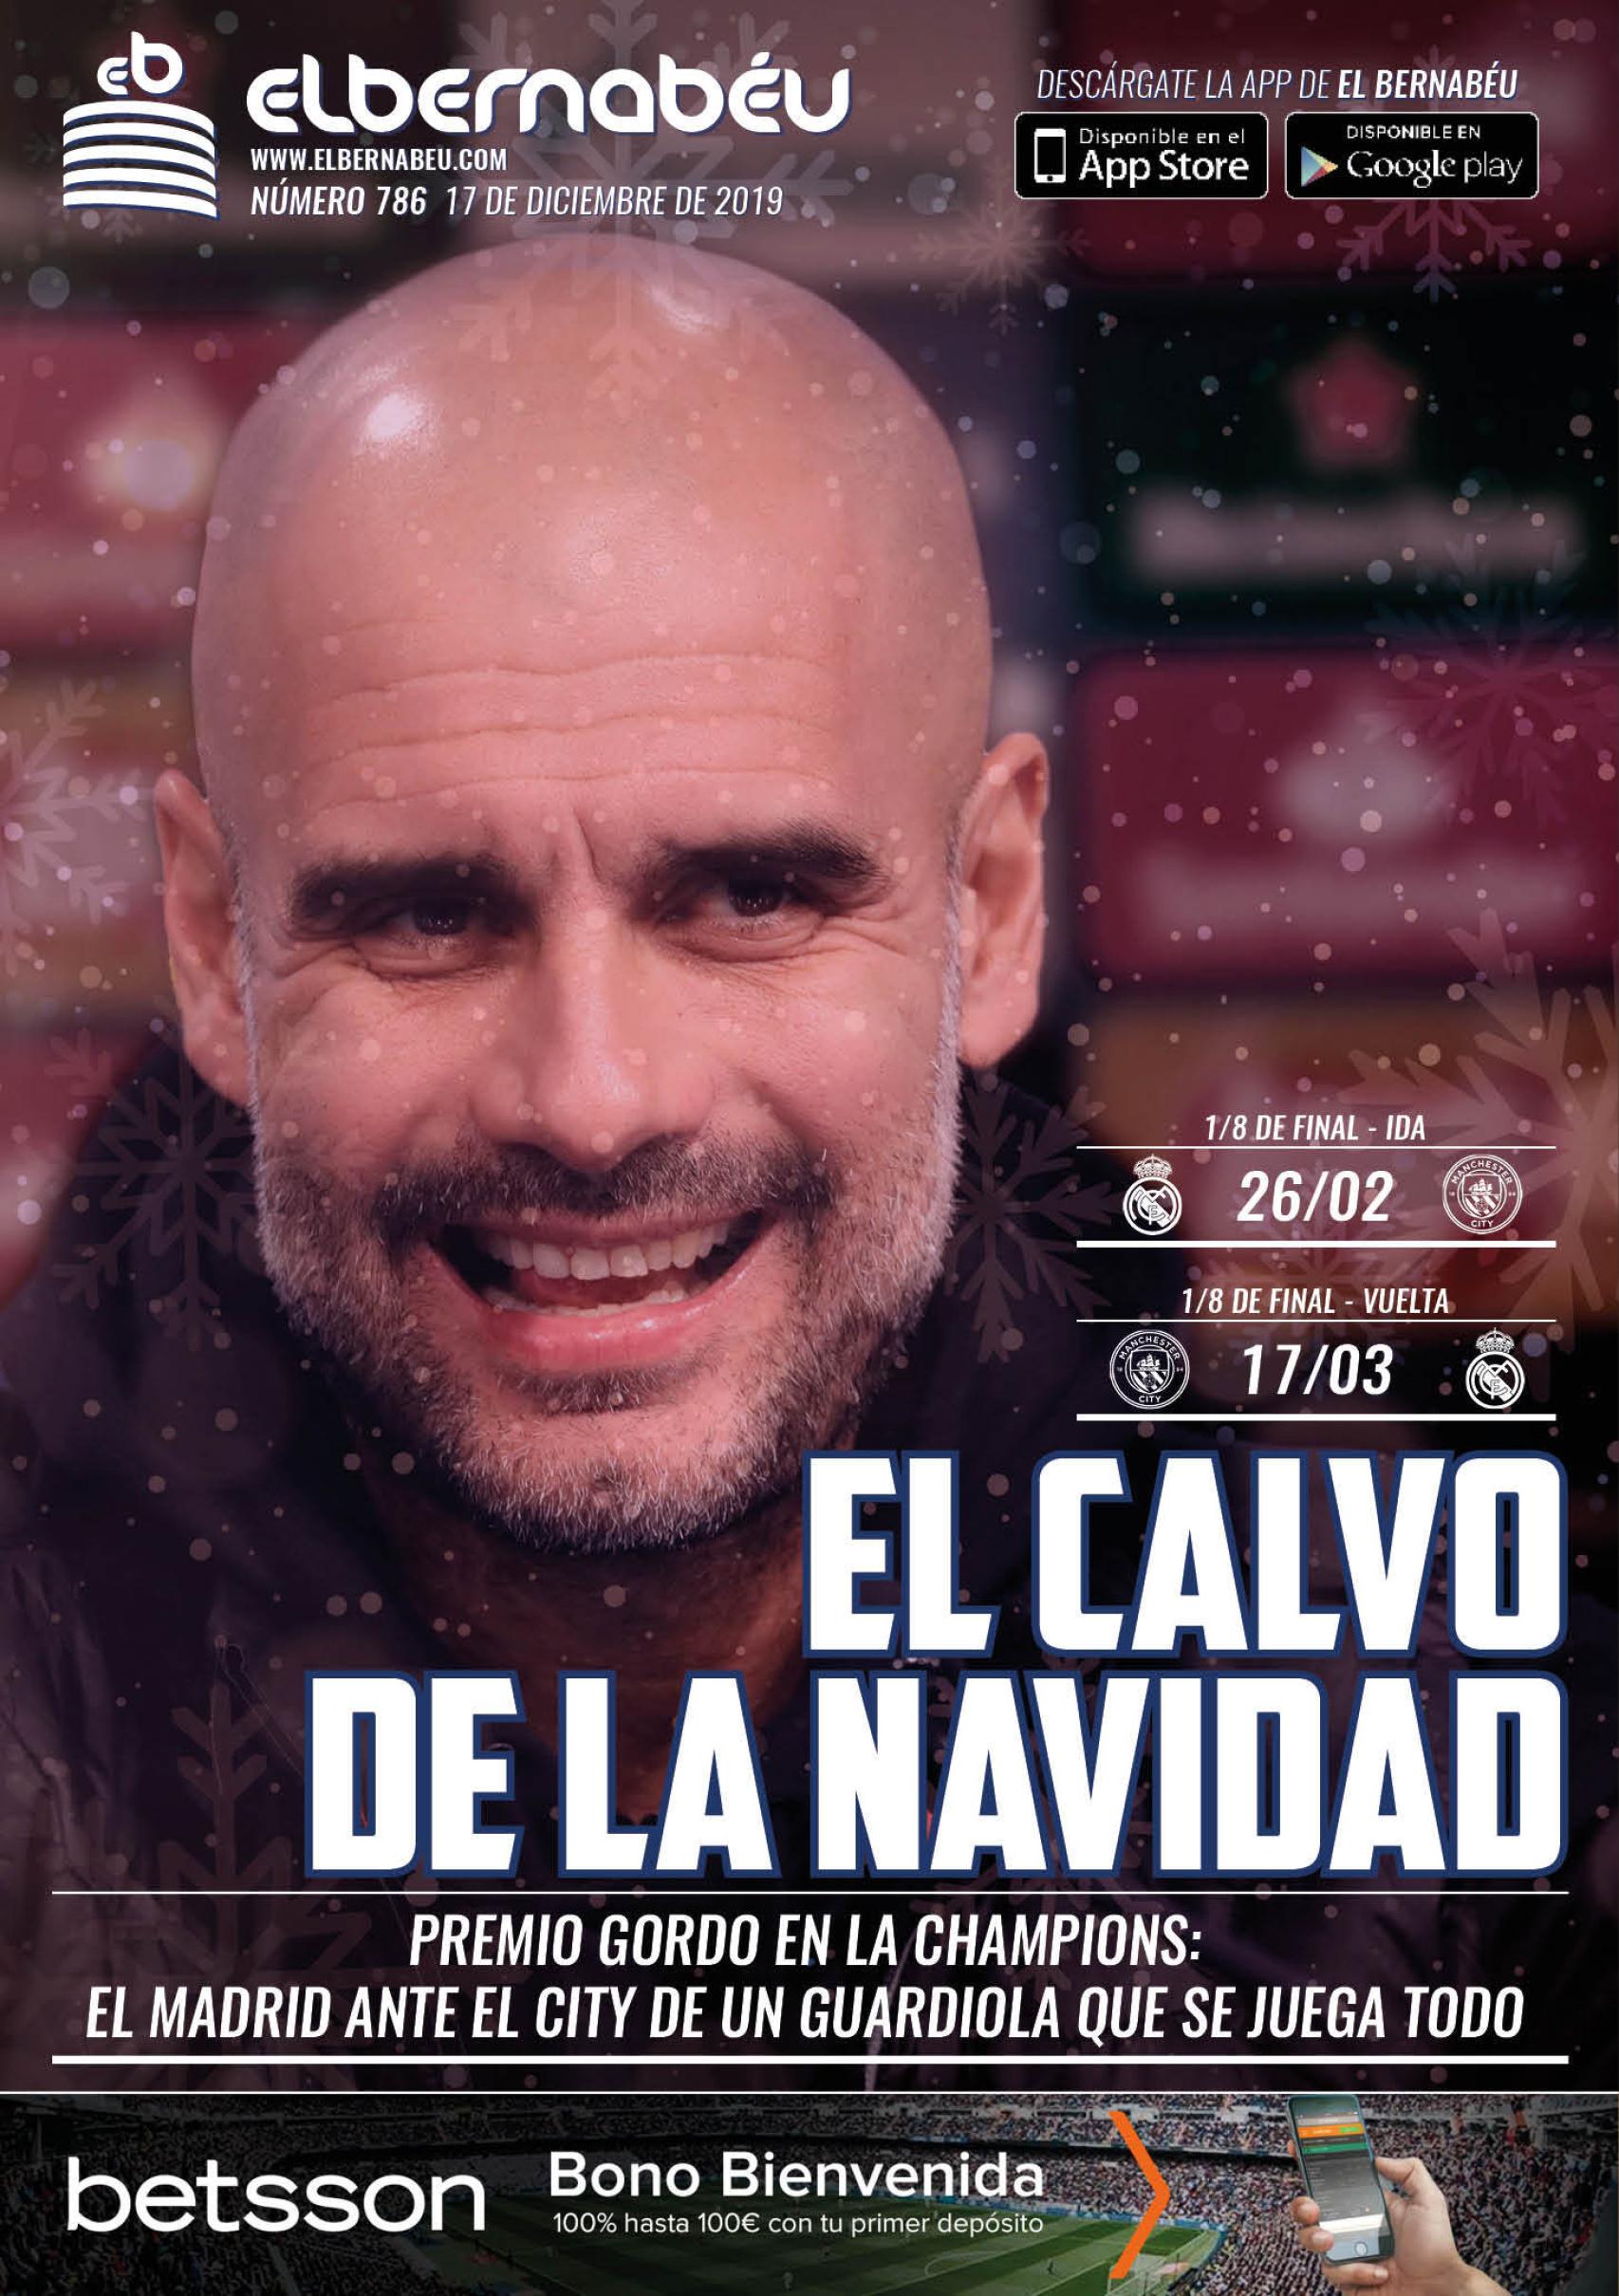 La portada de El Bernabéu (17/12/2019)